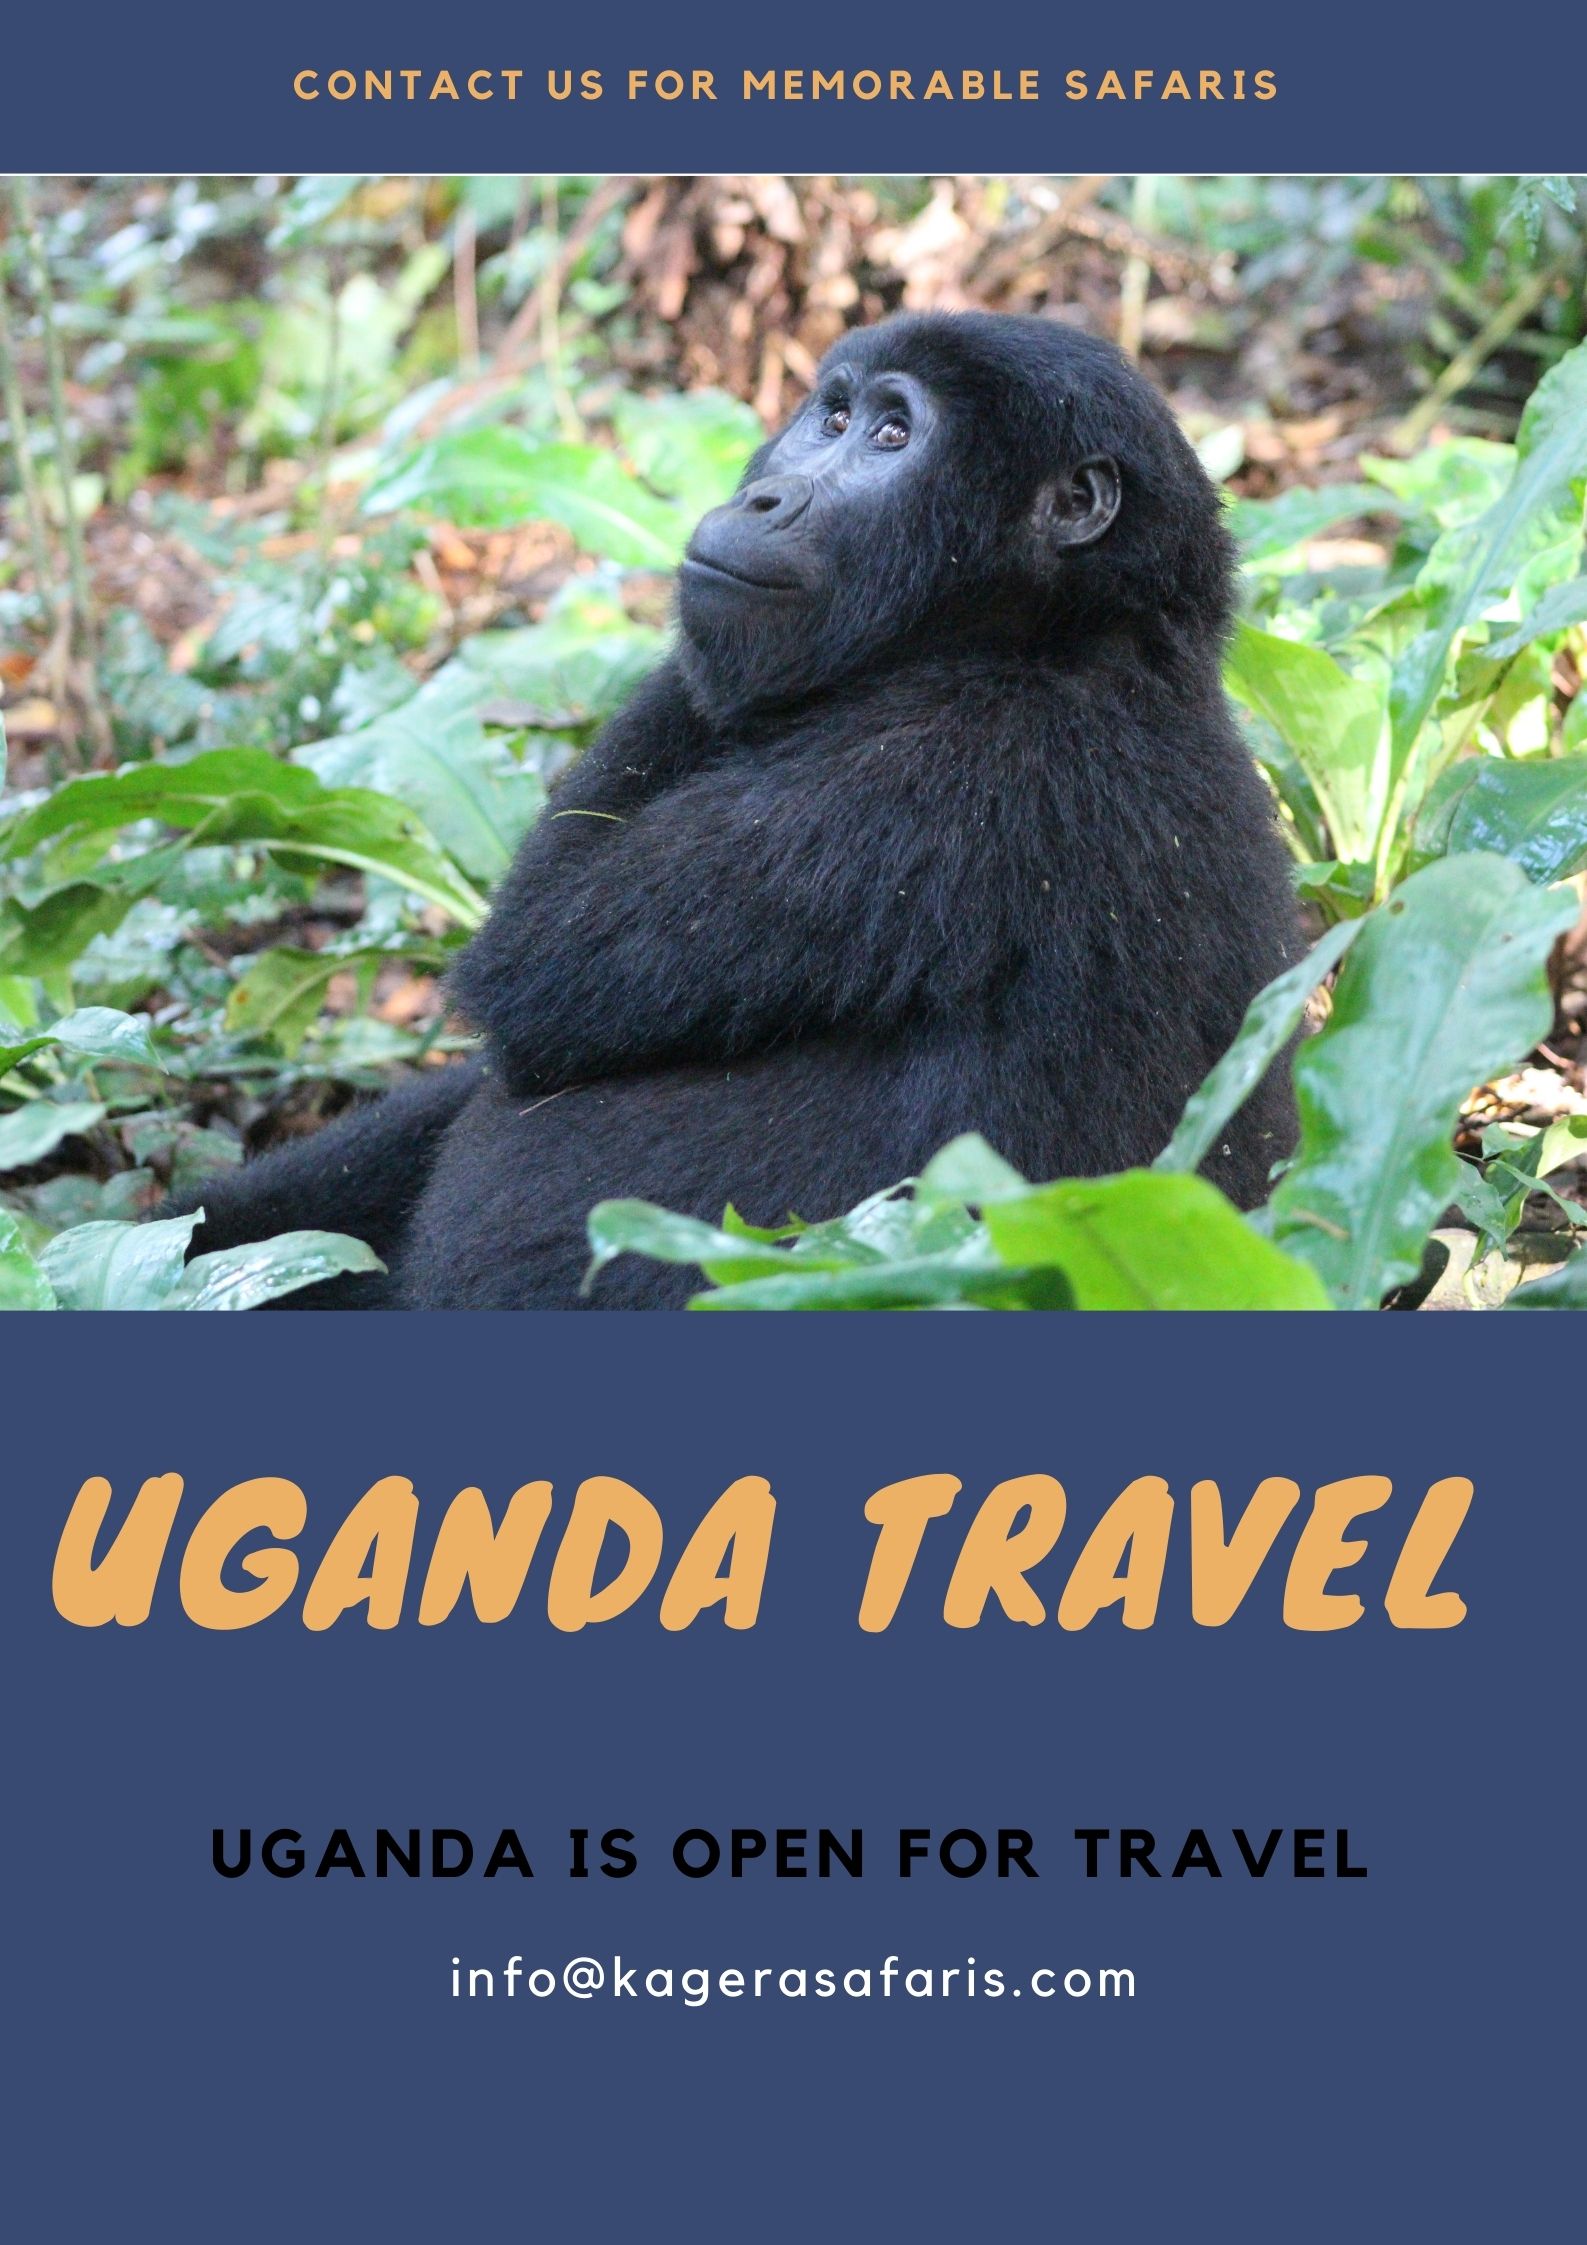 Is Uganda safe for tourists?